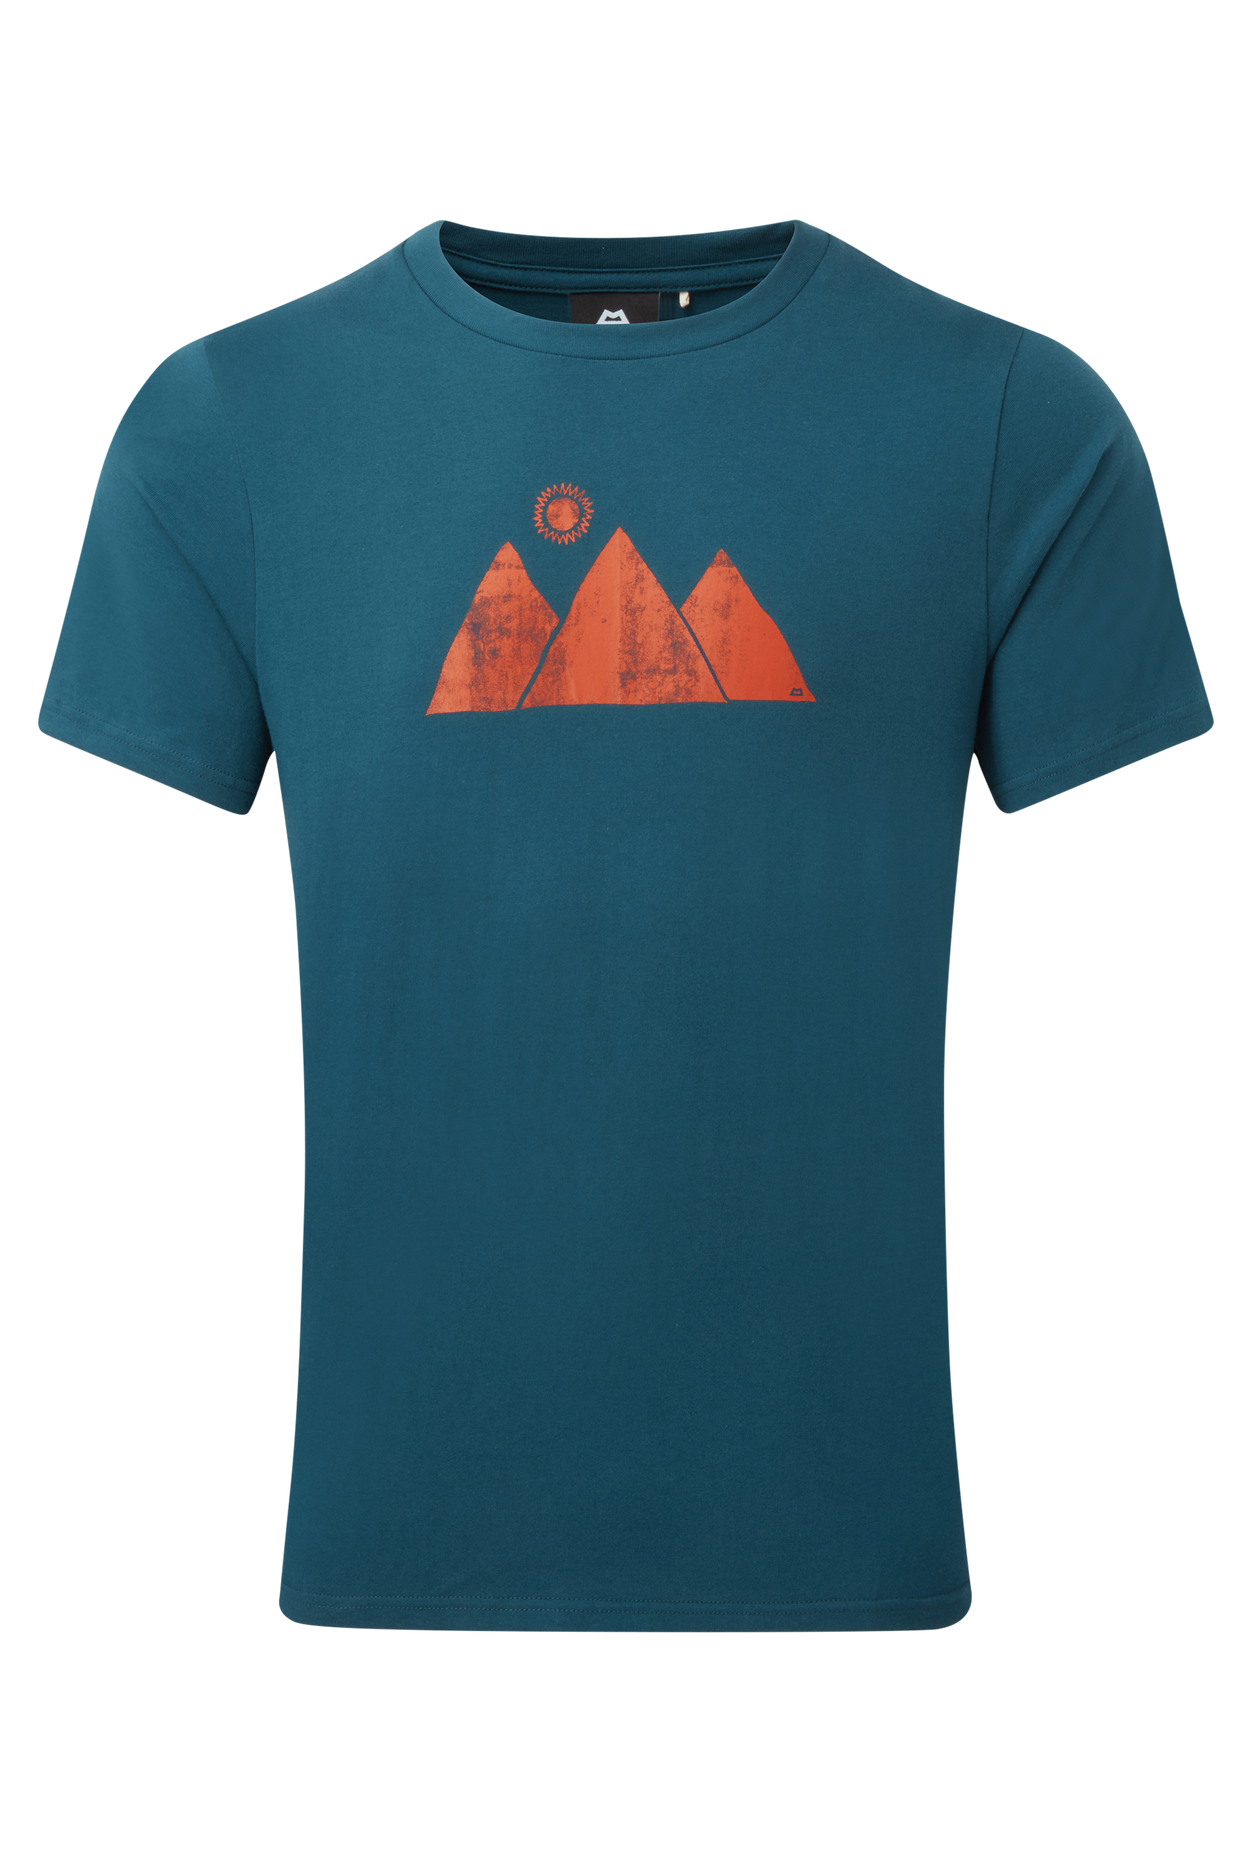 Mountain Equipment Mountain Sun Tee Men'S Barva: Majolica Blue, Velikost: M